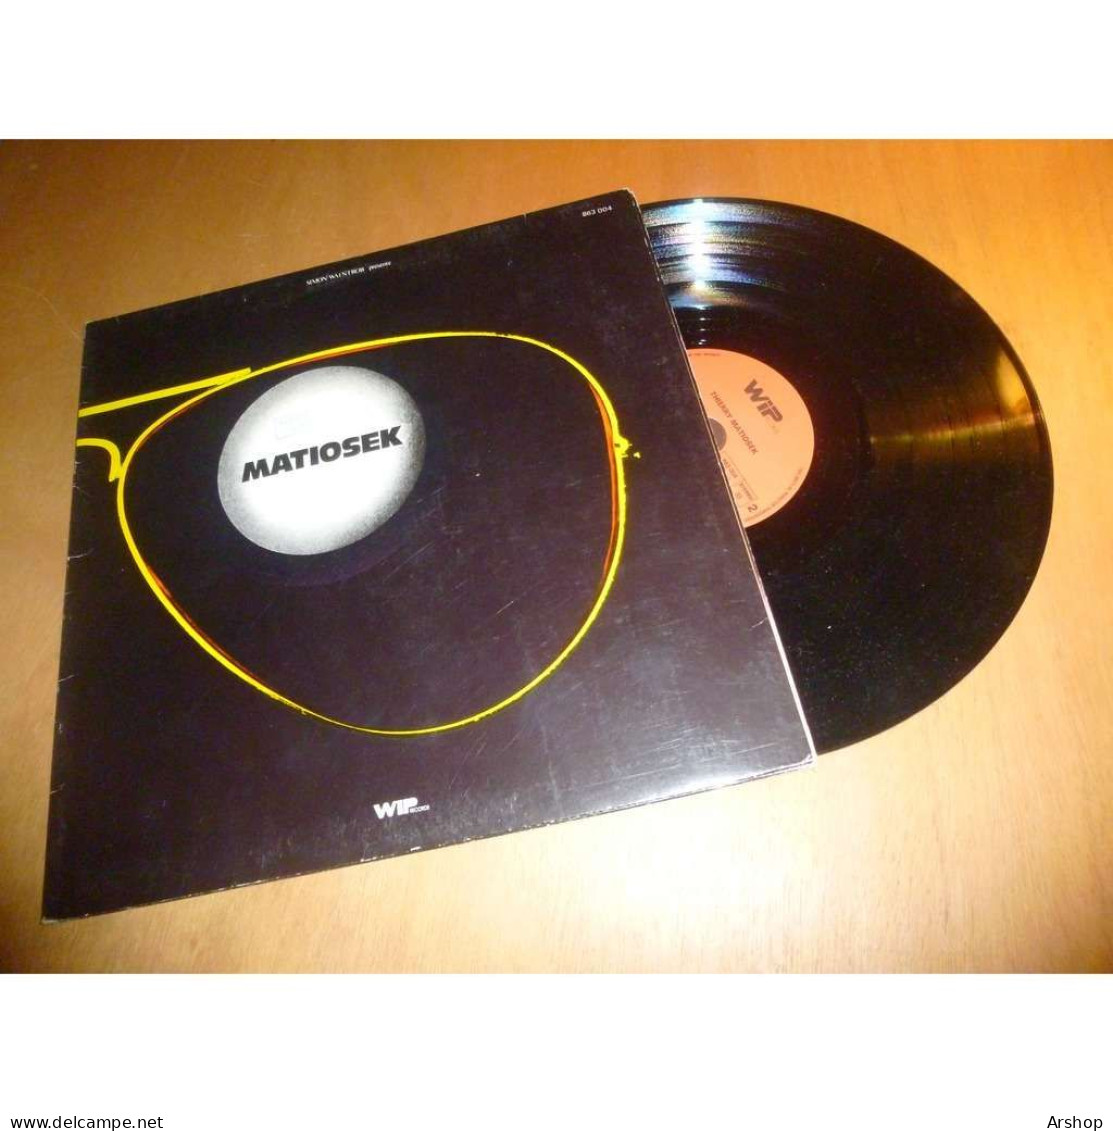 THIERRY MATIOSEK Matiosek WIP Records 863 04 Lp 1976 - Rock